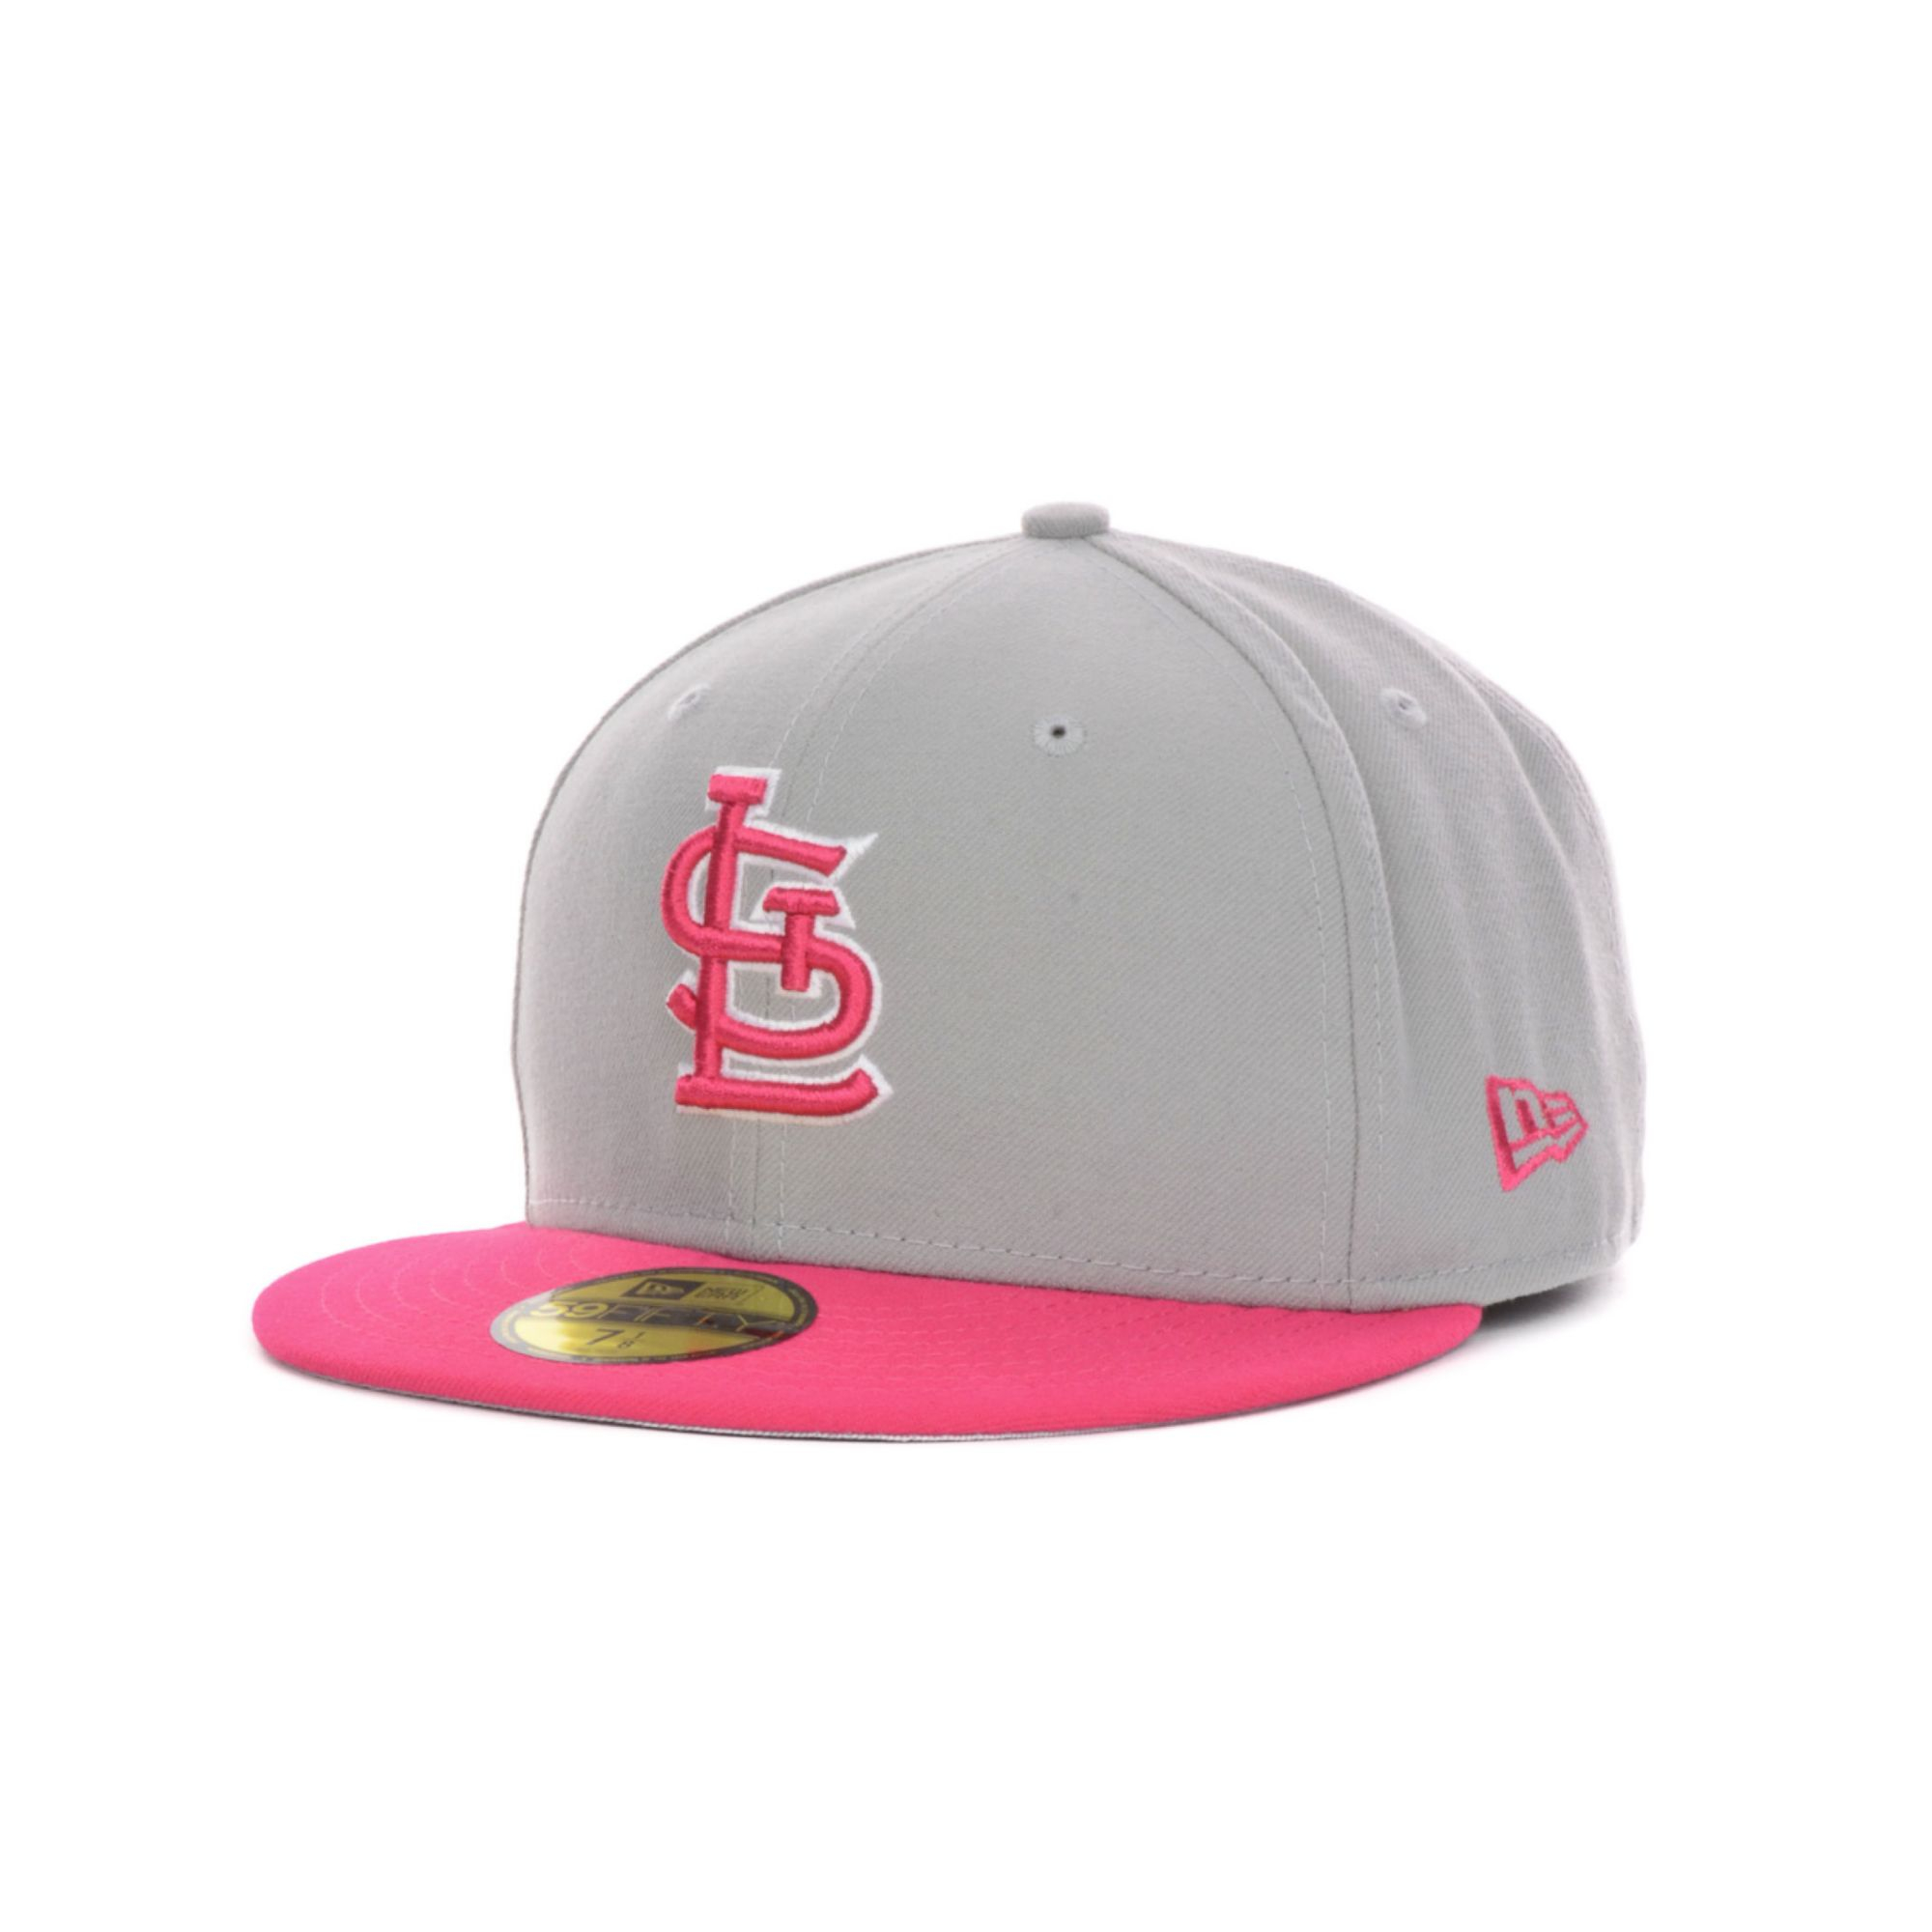 Lyst - Ktz St Louis Cardinals Mlb 2t Custom 59fifty Cap in Pink for Men